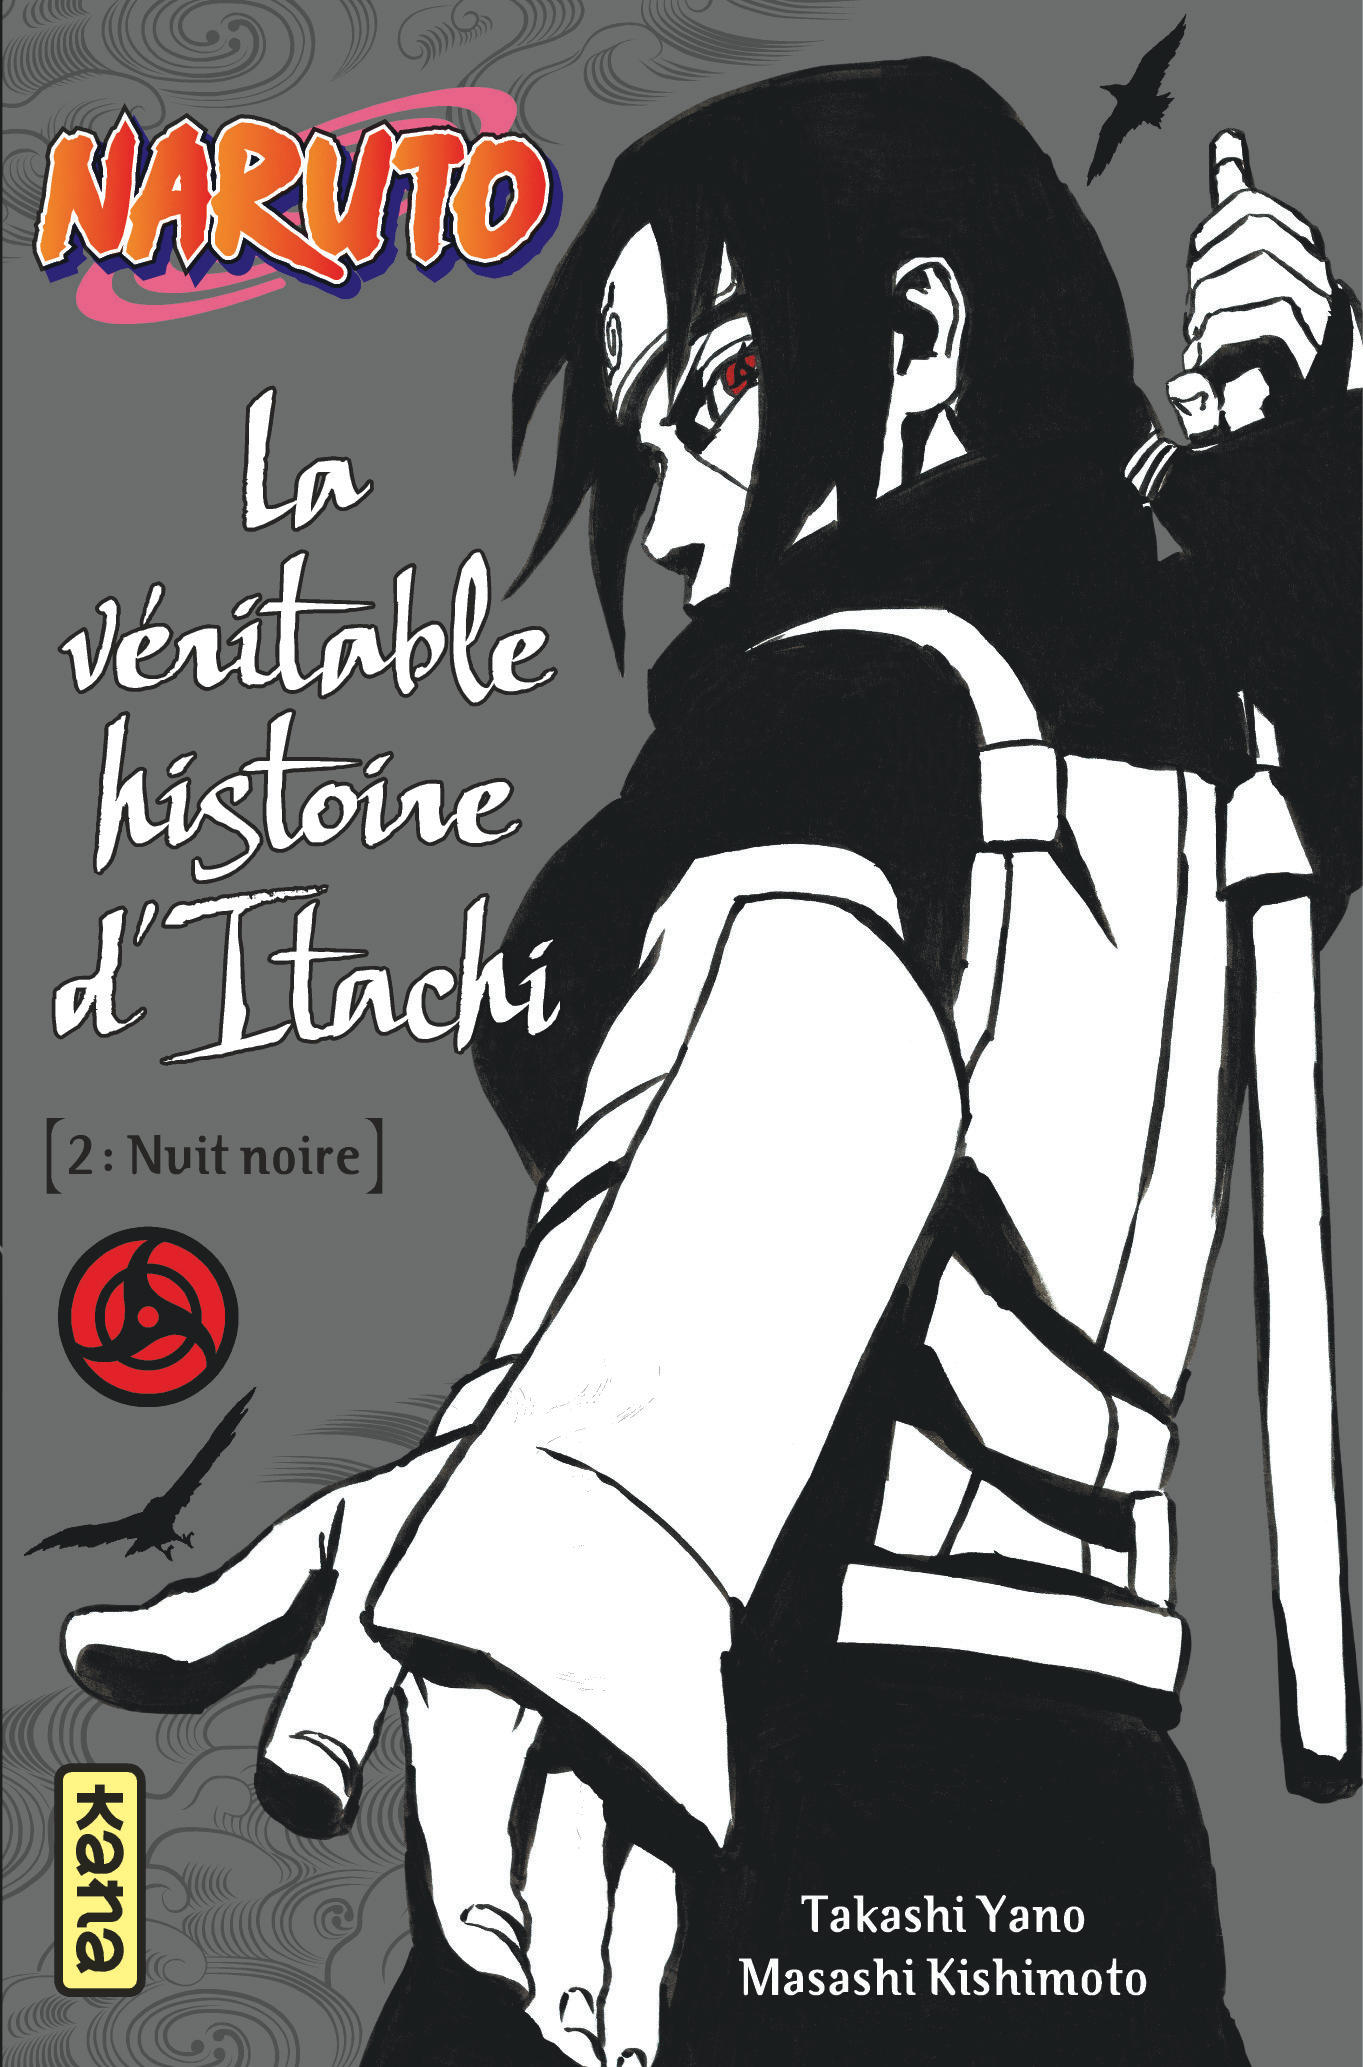 Naruto - romans – Tome 6 – La véritable histoire d'Itachi (Partie 2) - couv